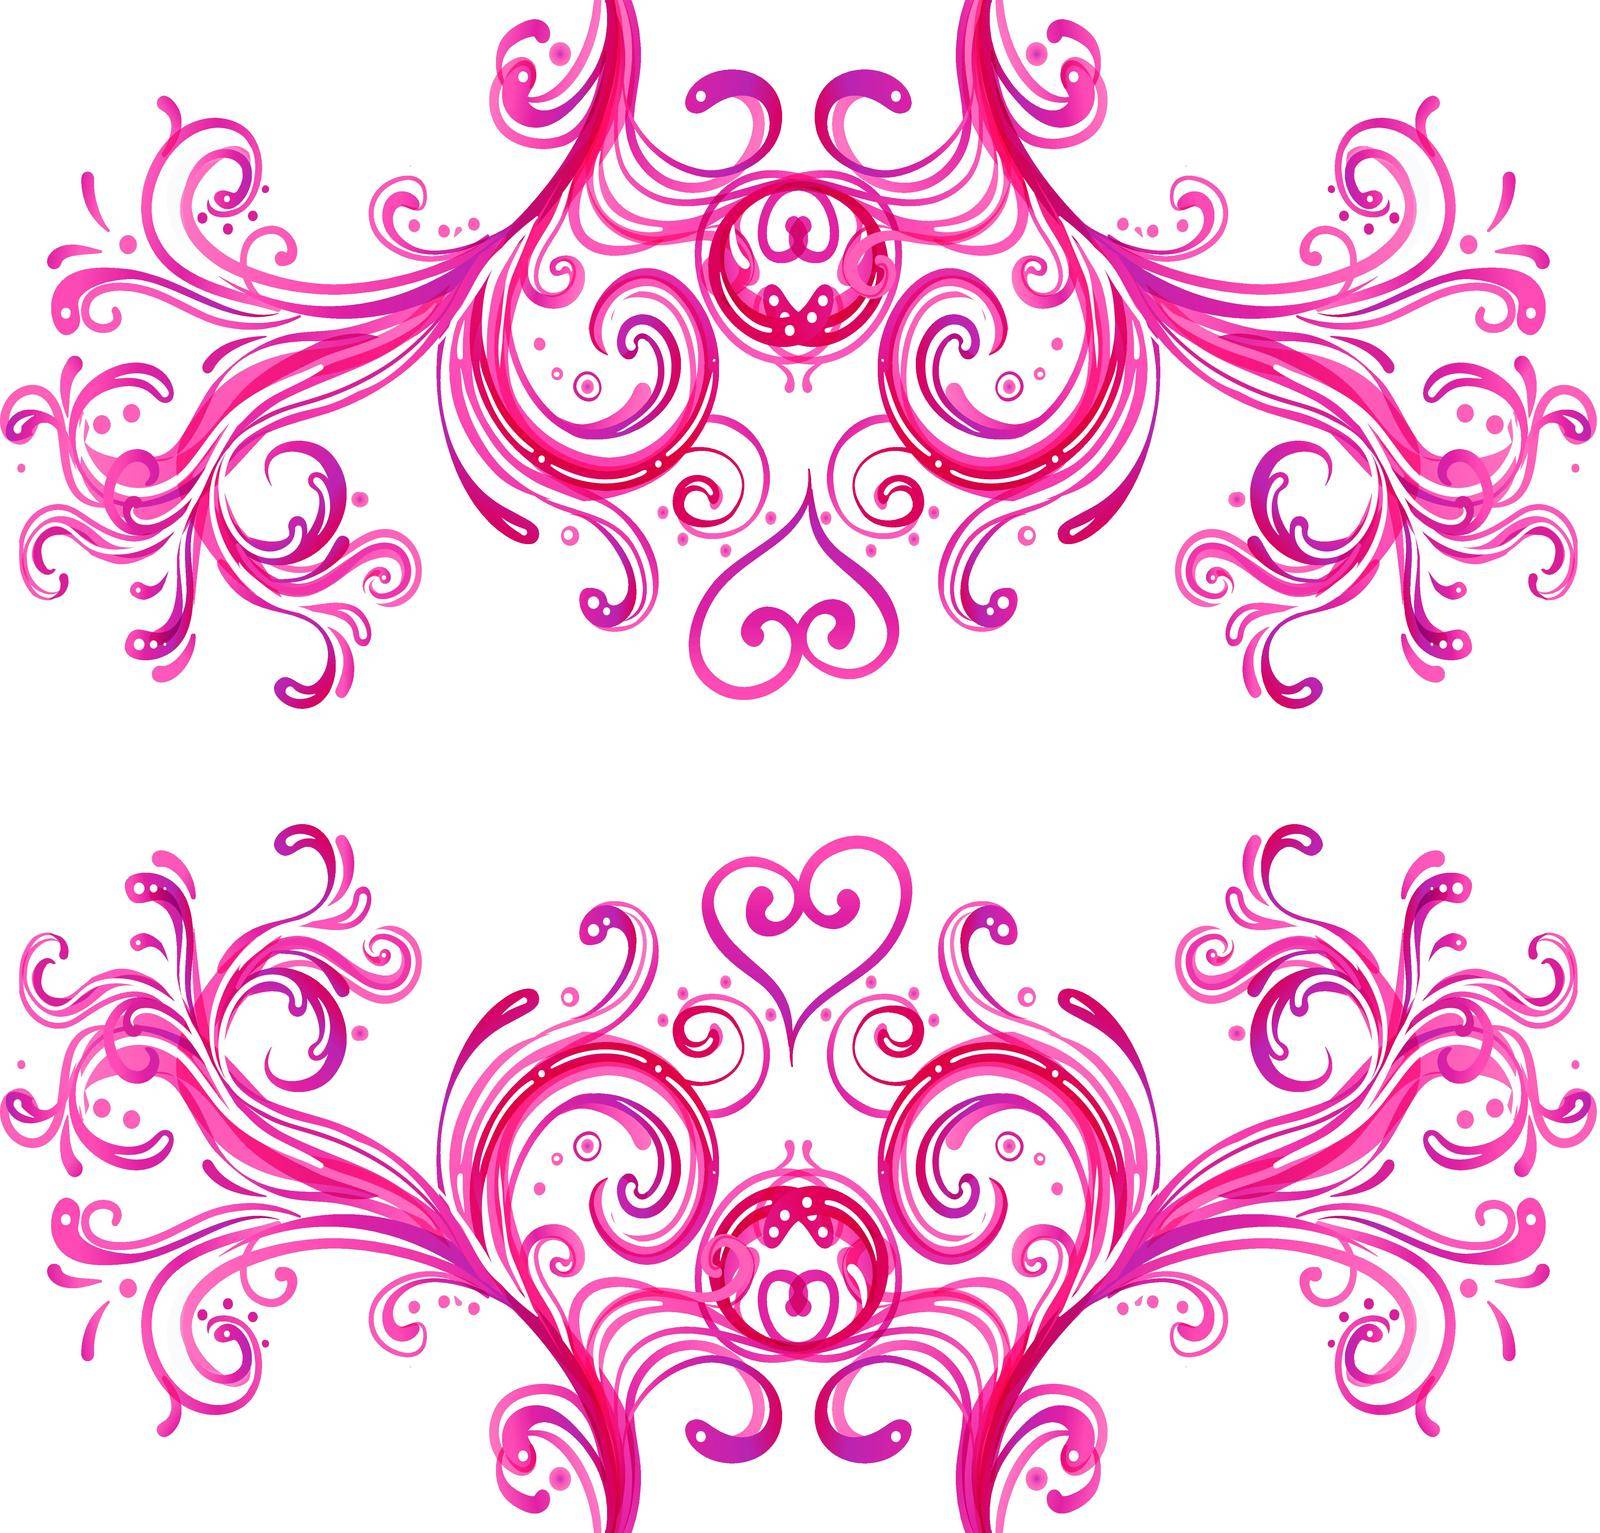 Beautiful pink swirls background by varka